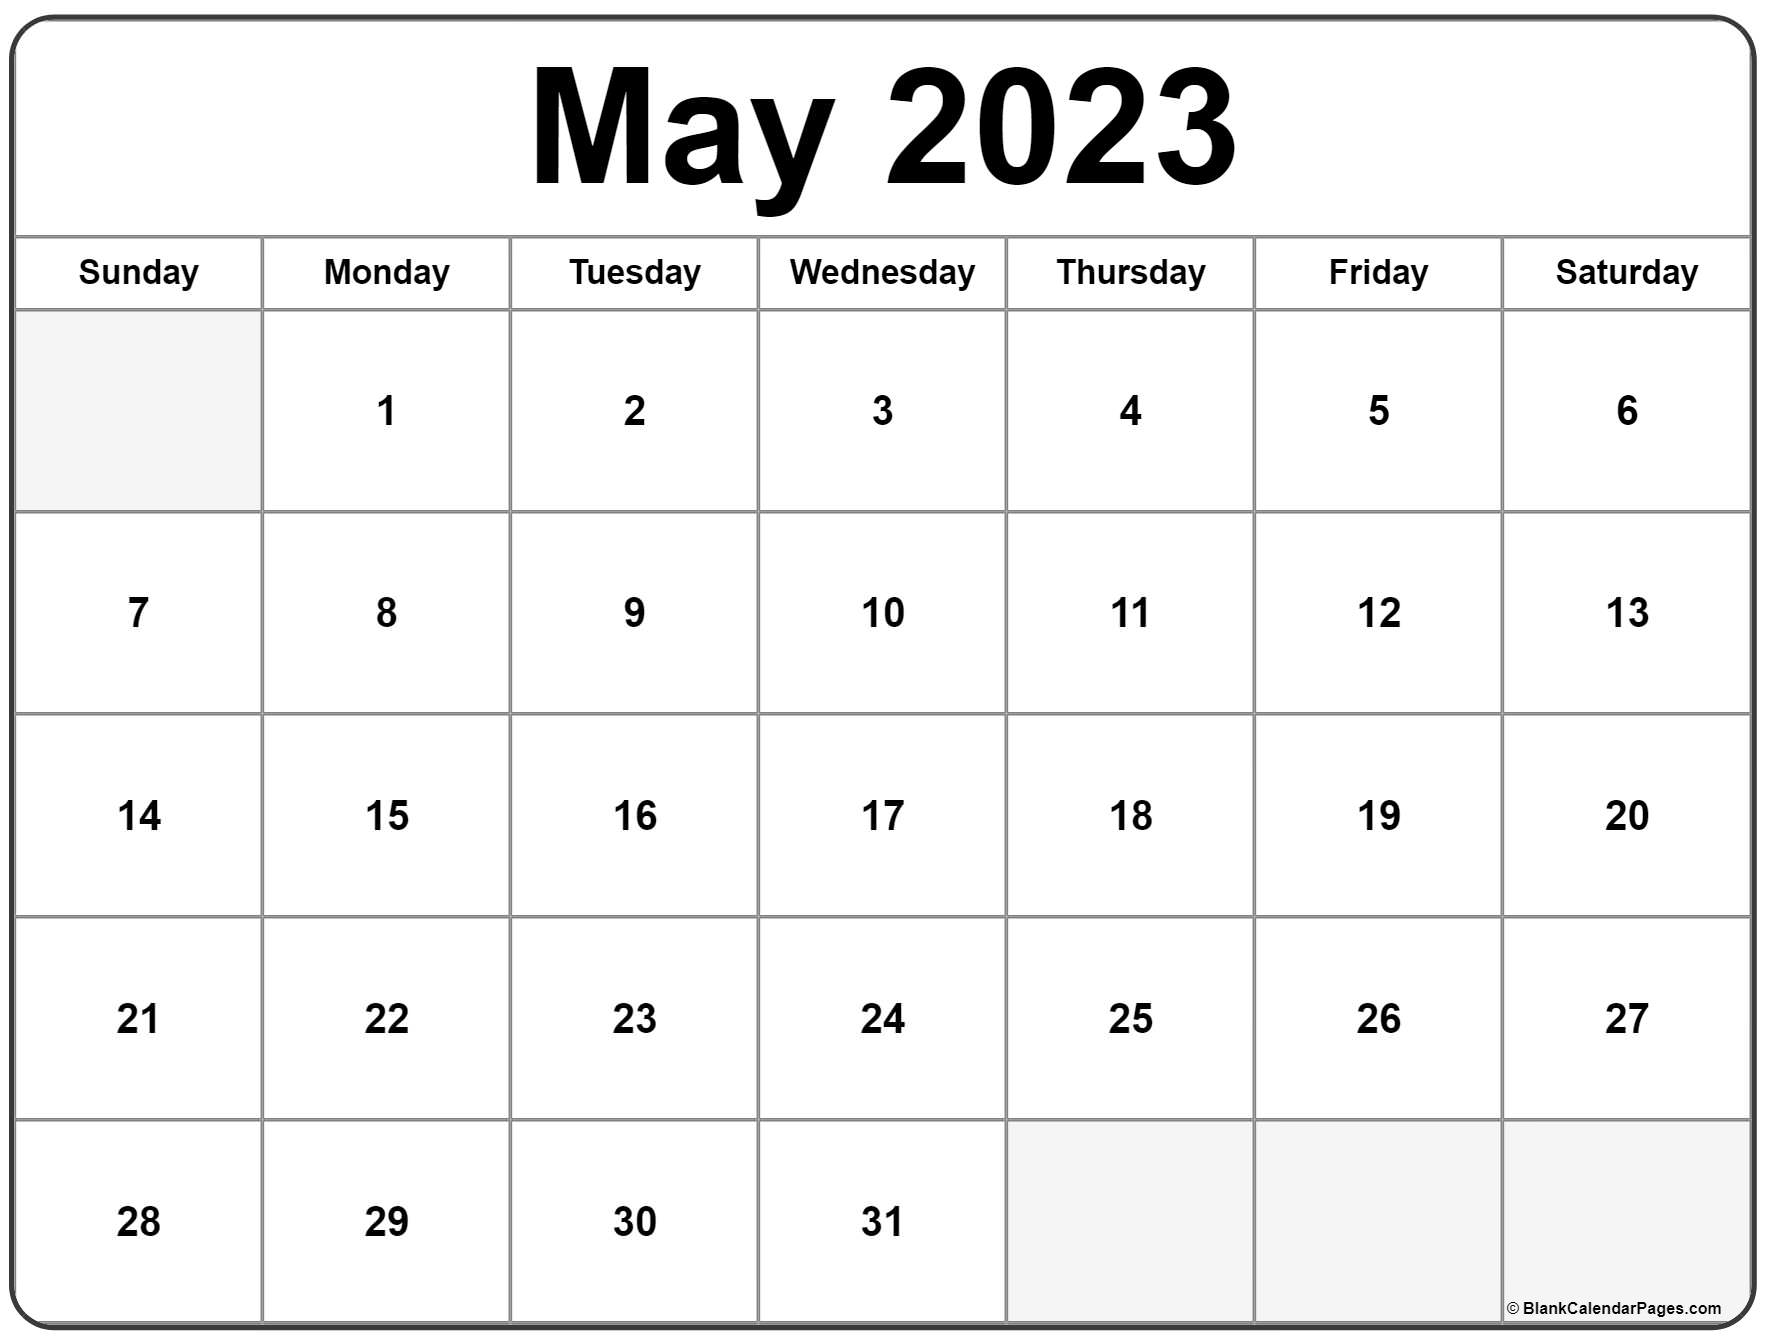 May 2023 Calendar | Free Printable Monthly Calendars